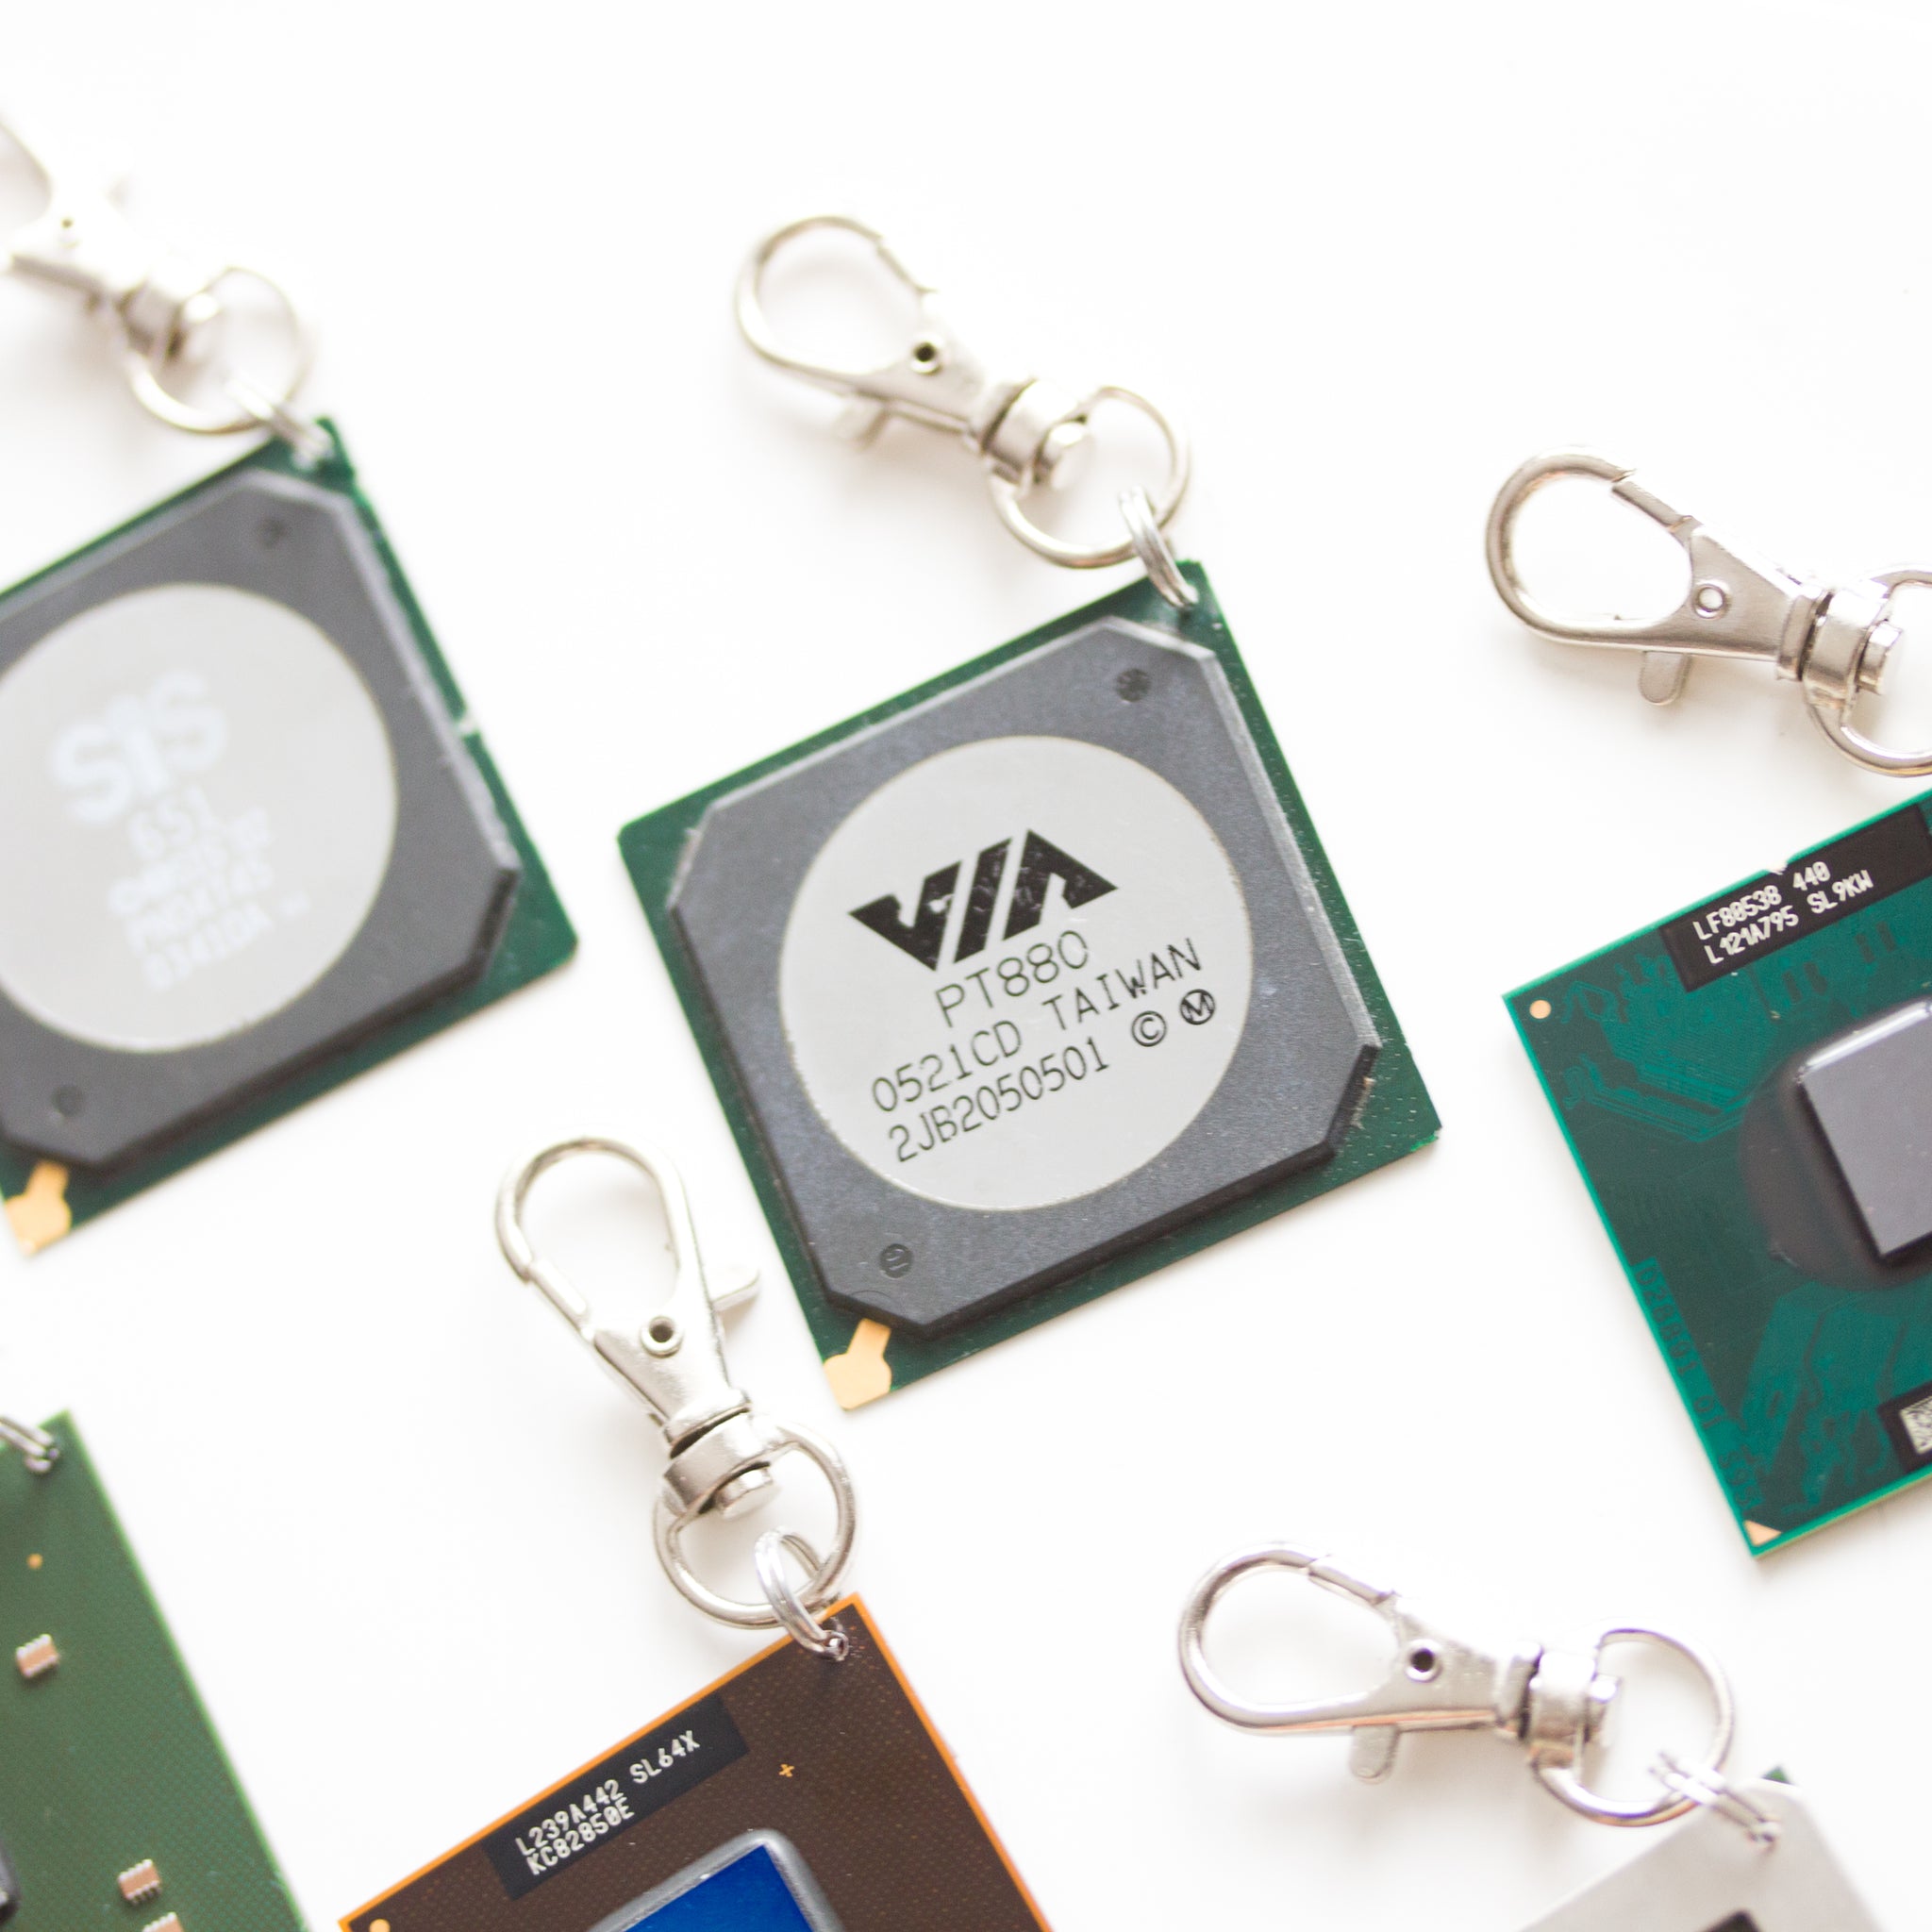 Chipset keychain, recycled computer keychain, graphic processor, GPU